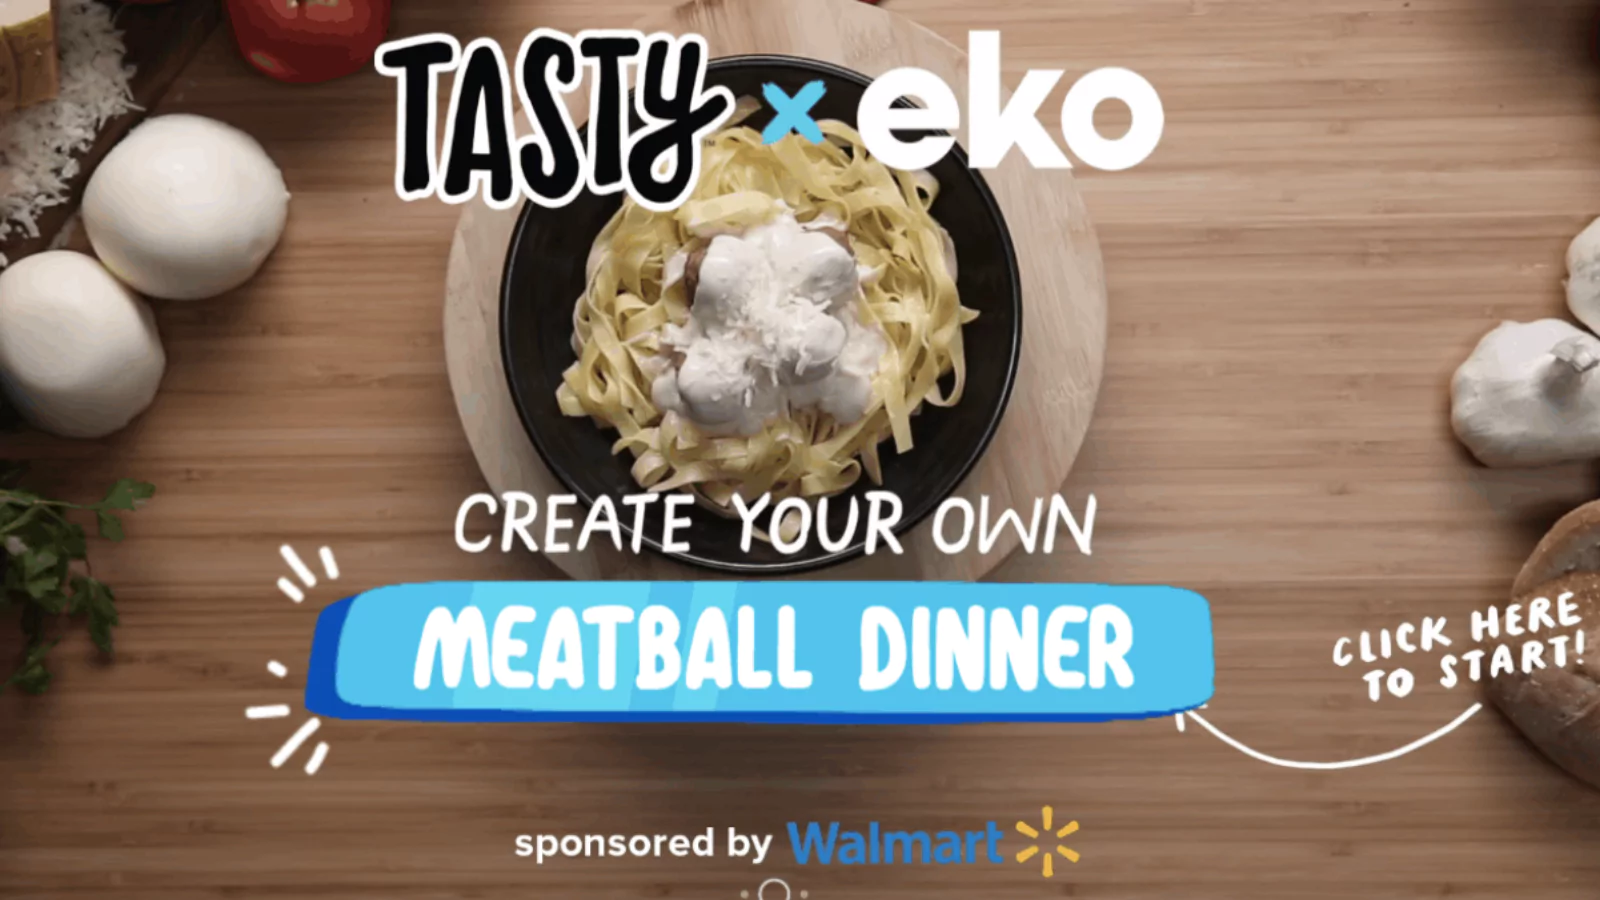 native-advertising-example-tasty-walmart-eko